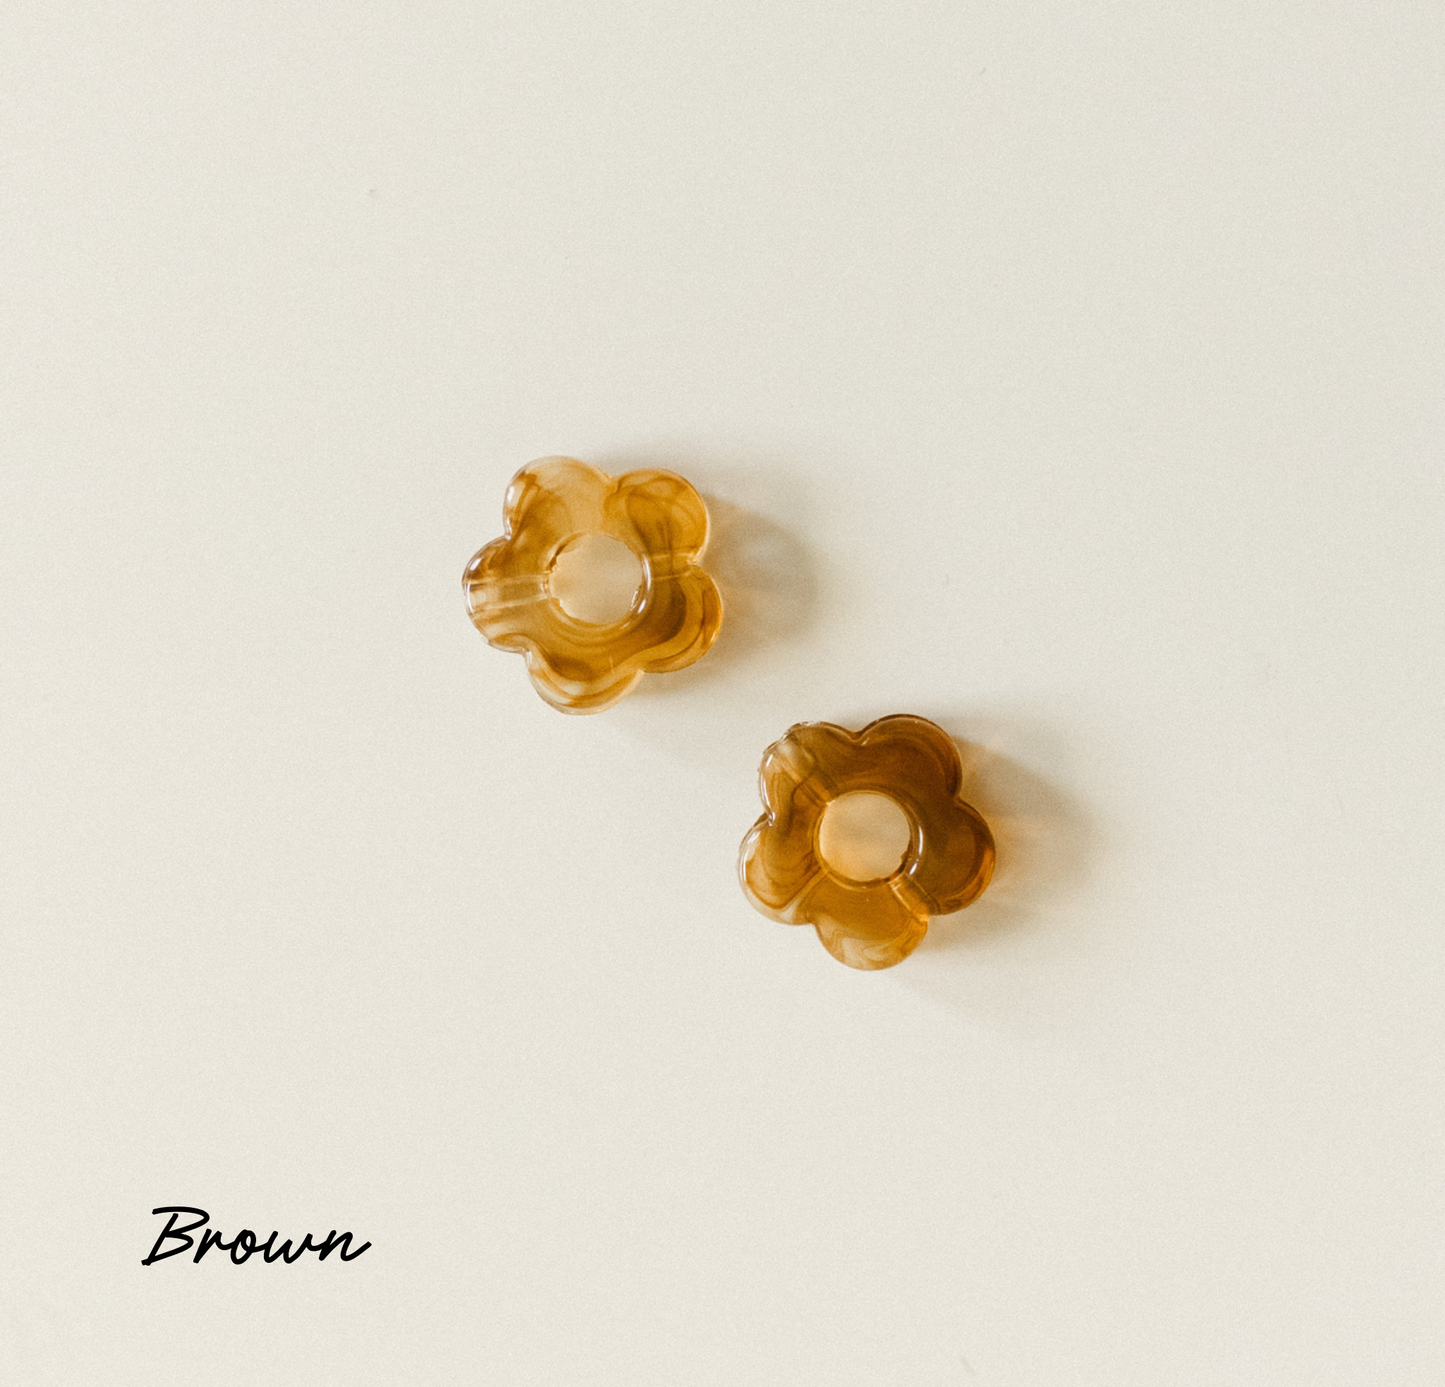 Flower earring charms